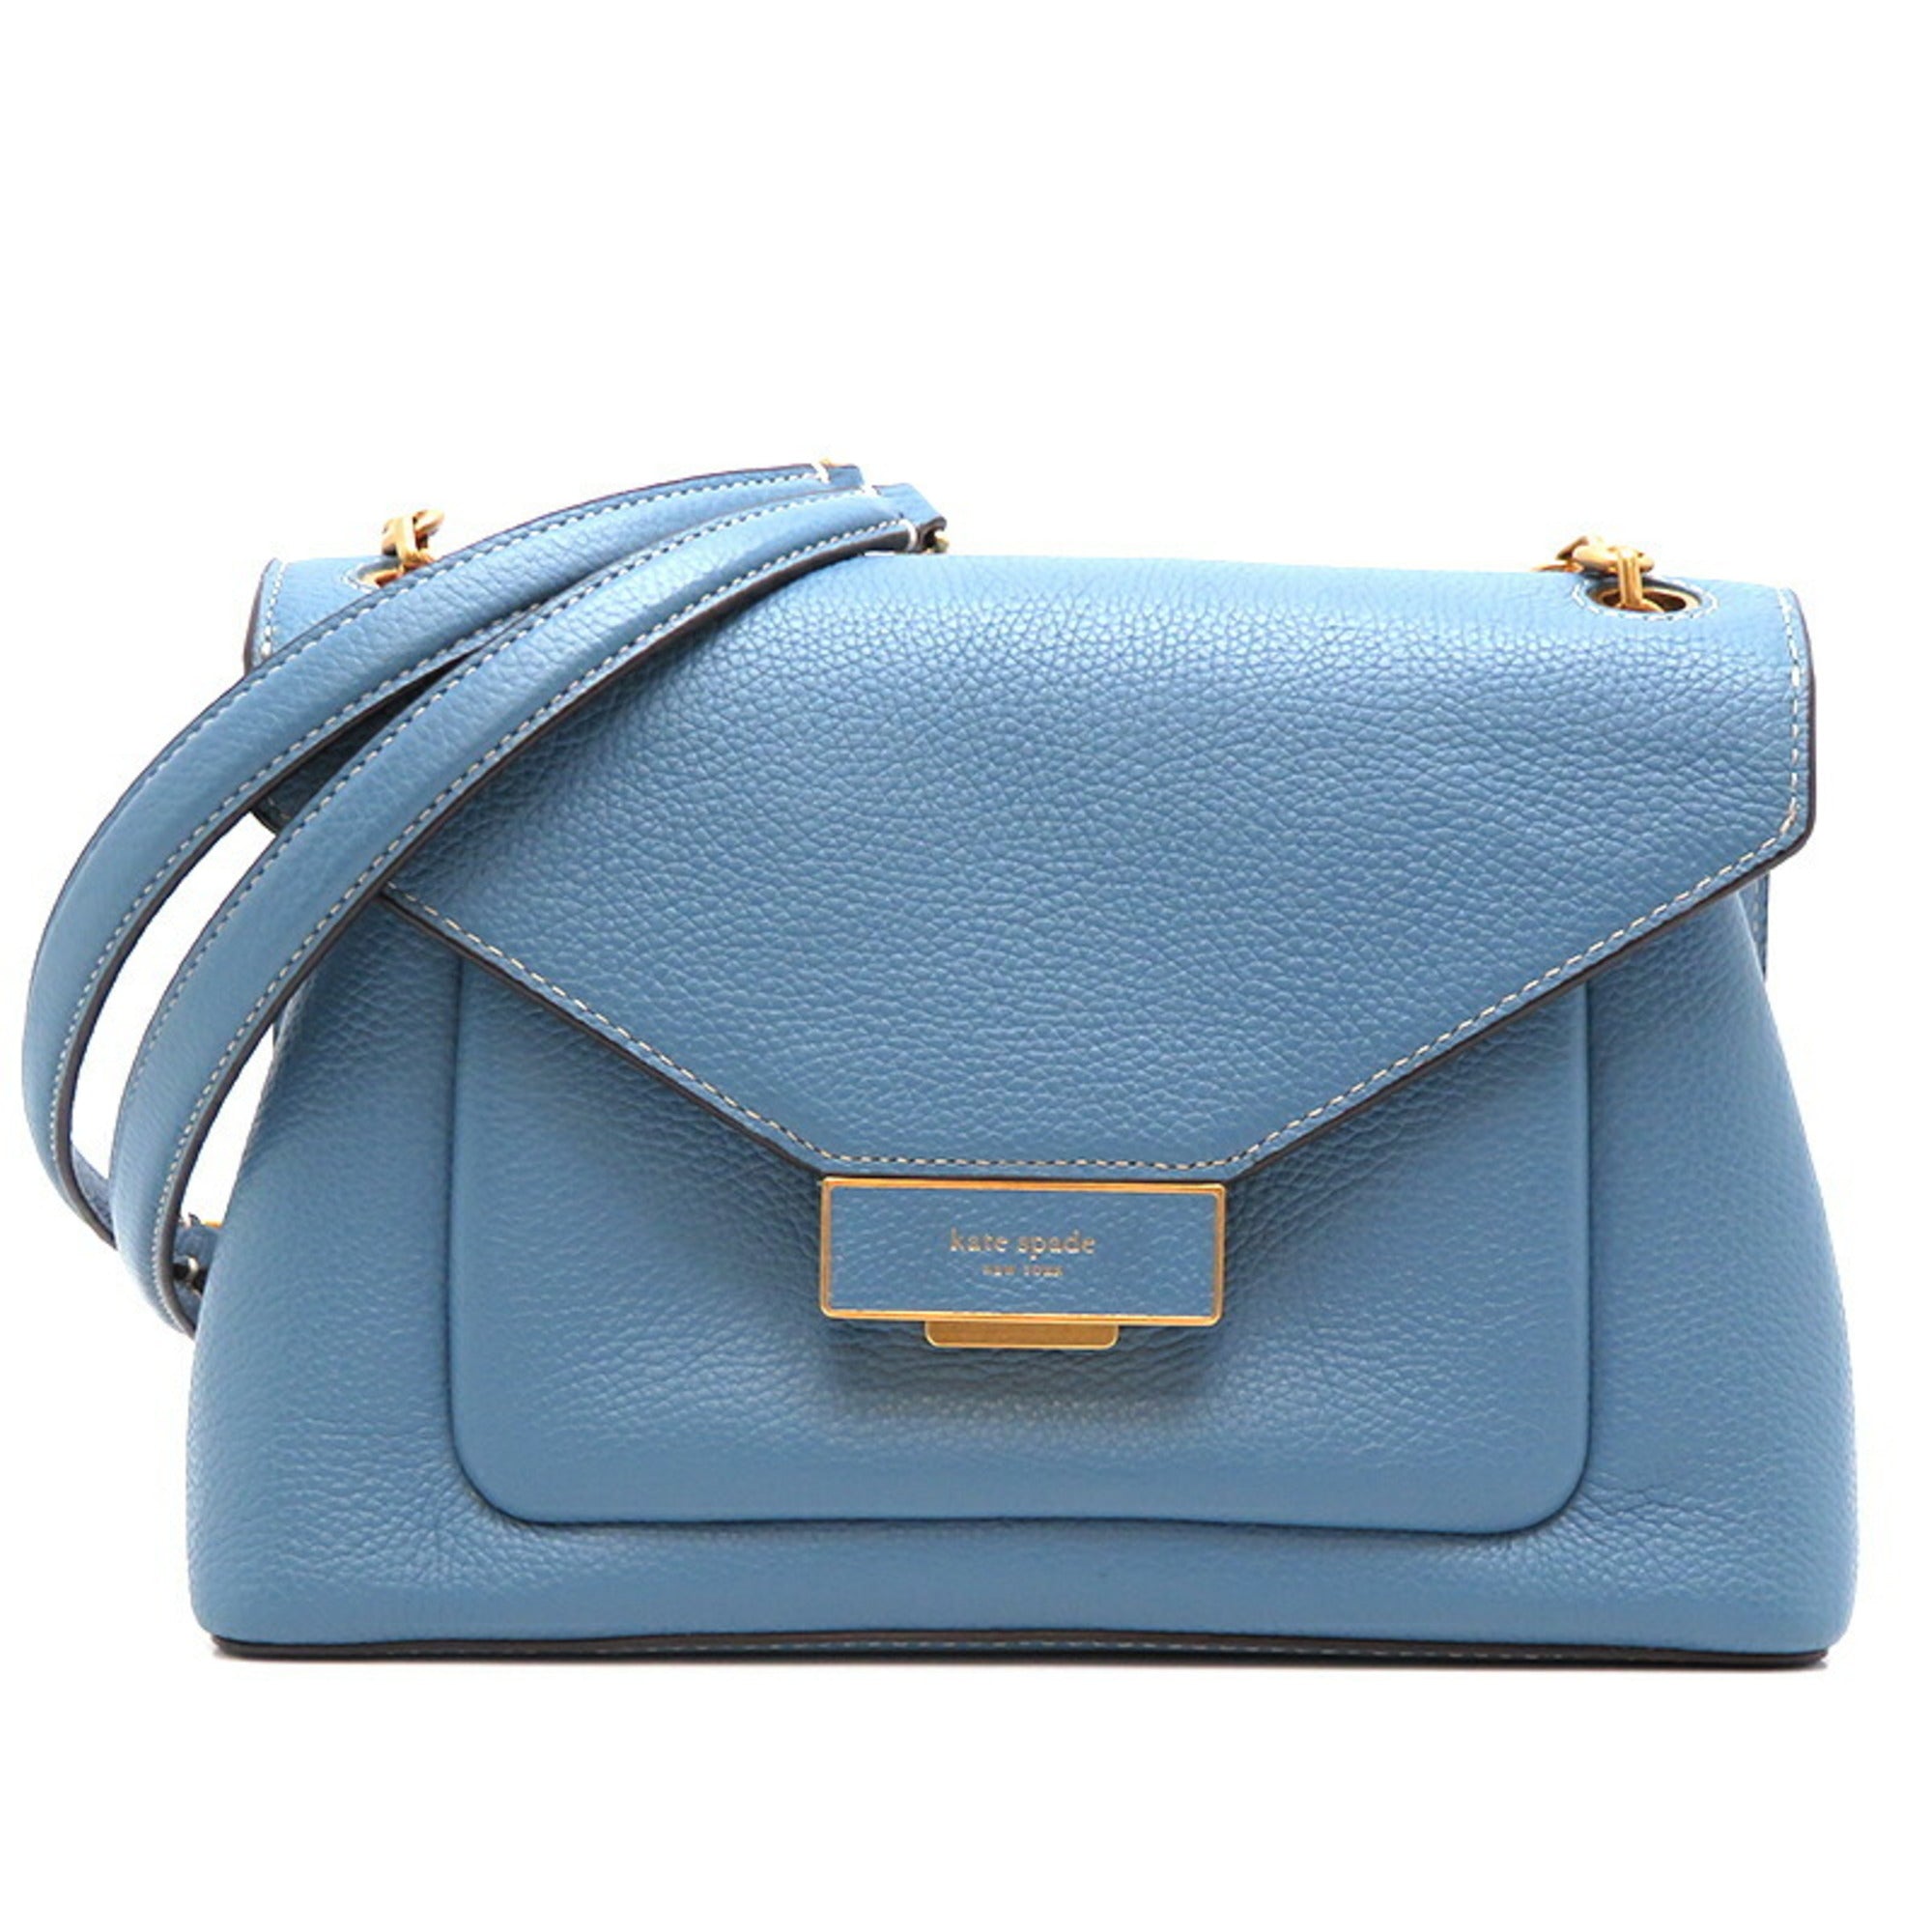 Gramercy Medium Convertible Women's Shoulder Bag K9916- Leather Blue